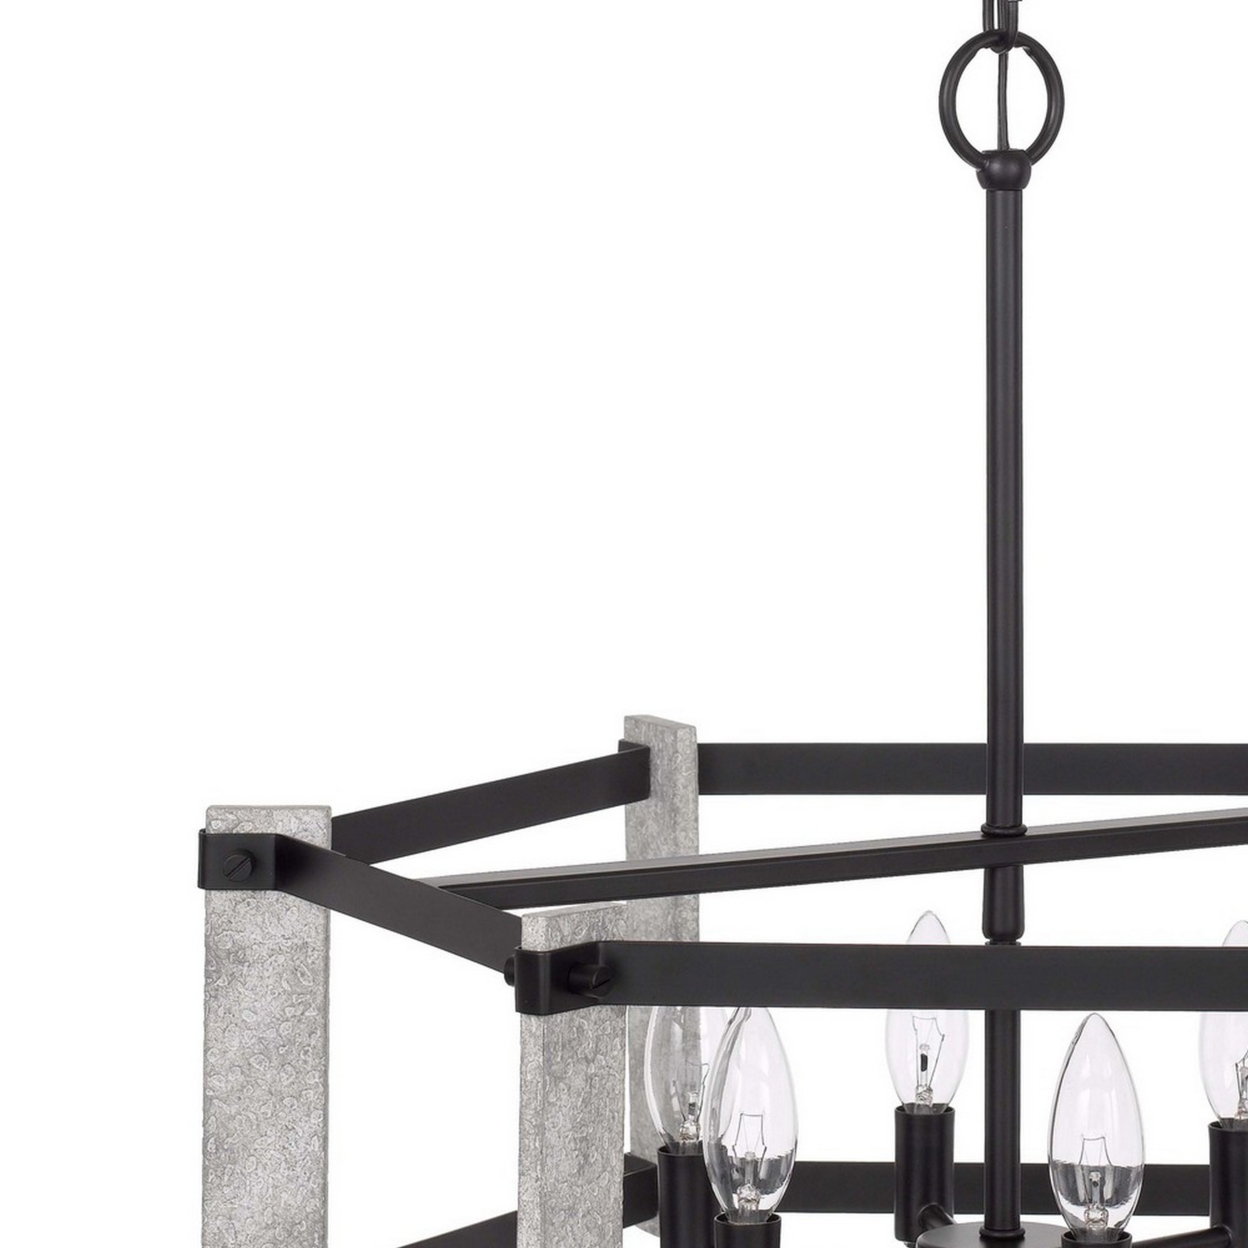 Chandelier With Hexagonal Cage Design Metal Frame, Gray And Black- Saltoro Sherpi